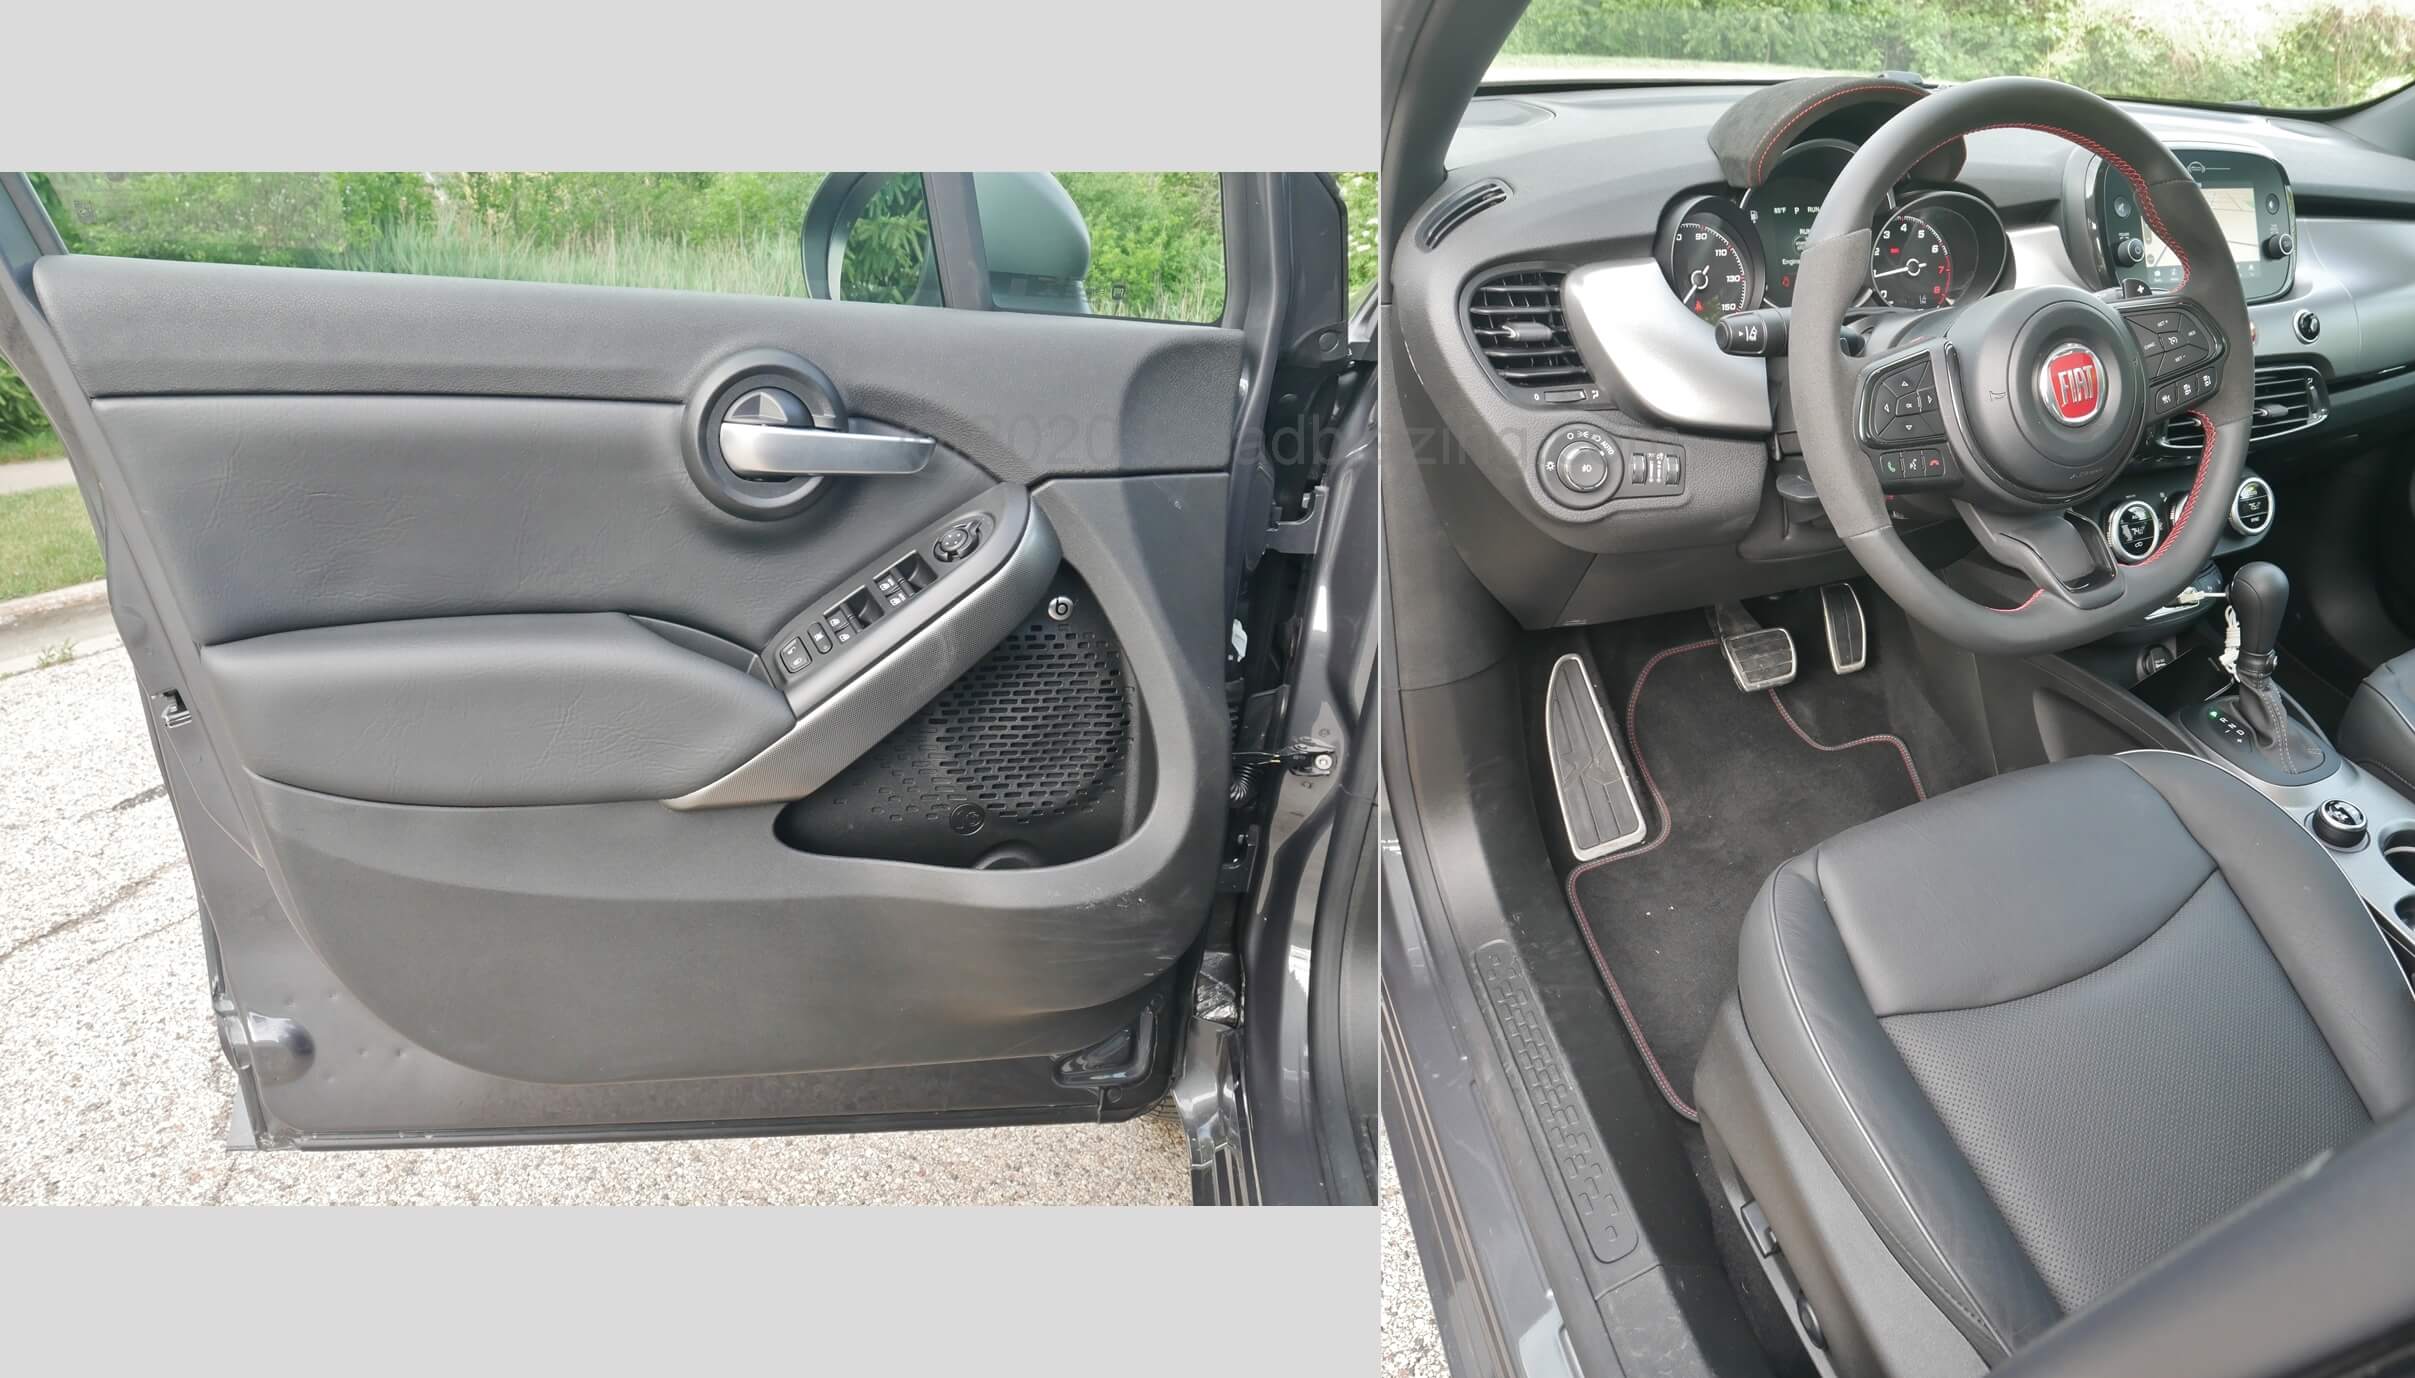 2020 FIAT 500X Sport AWD: middling door pocket storage, slip-proof aluminum pedal grips